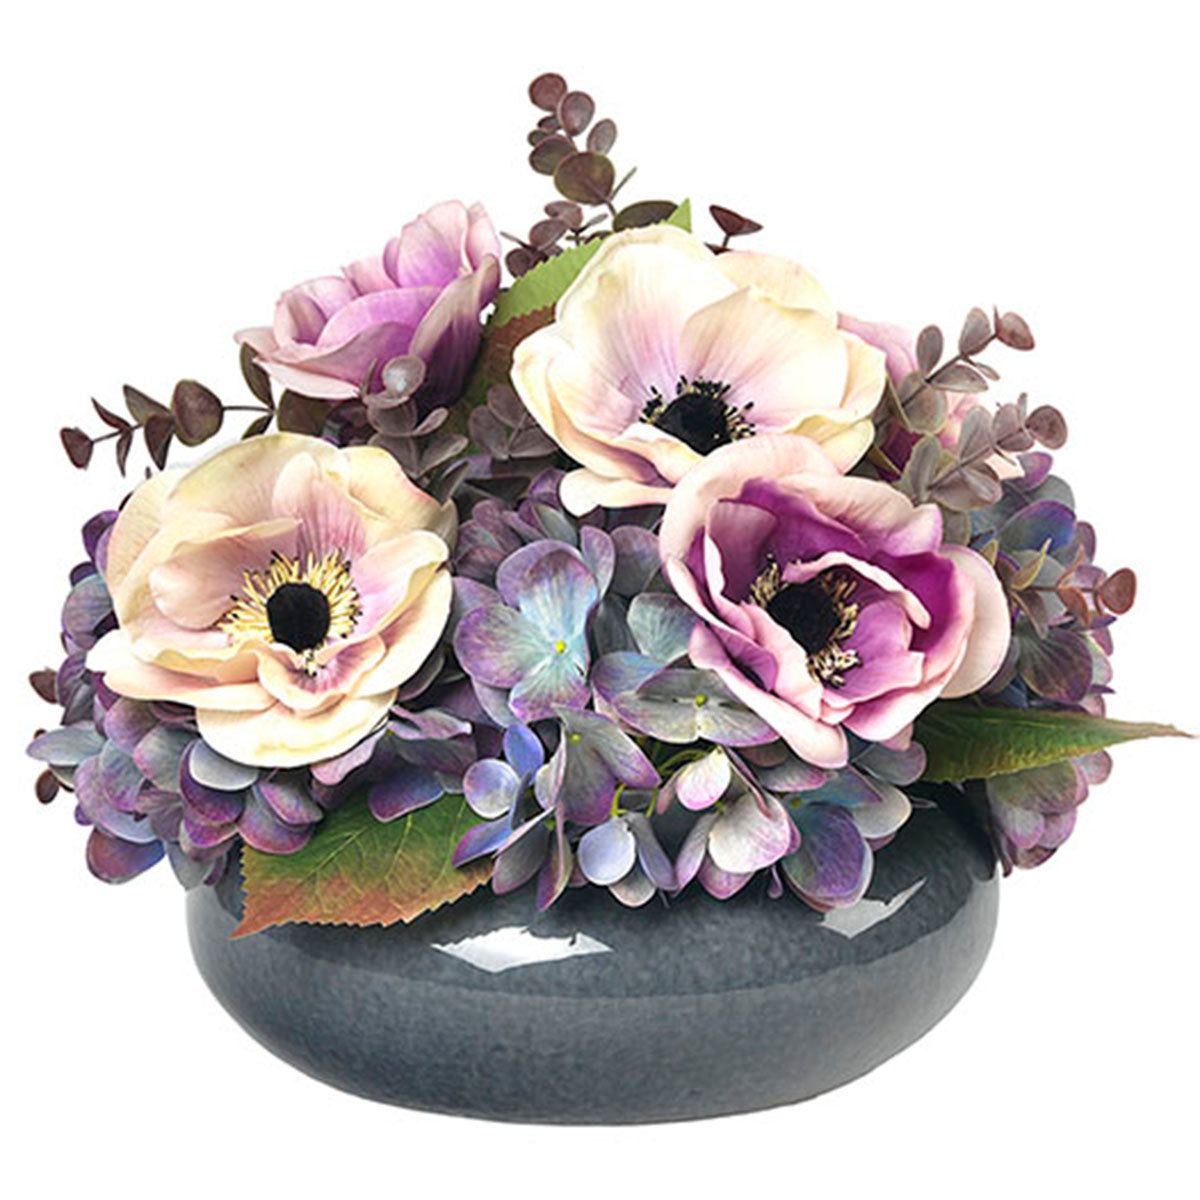 Diane James Mixed Anemones & Hydrangea Bouquet in Ceramic Bowl